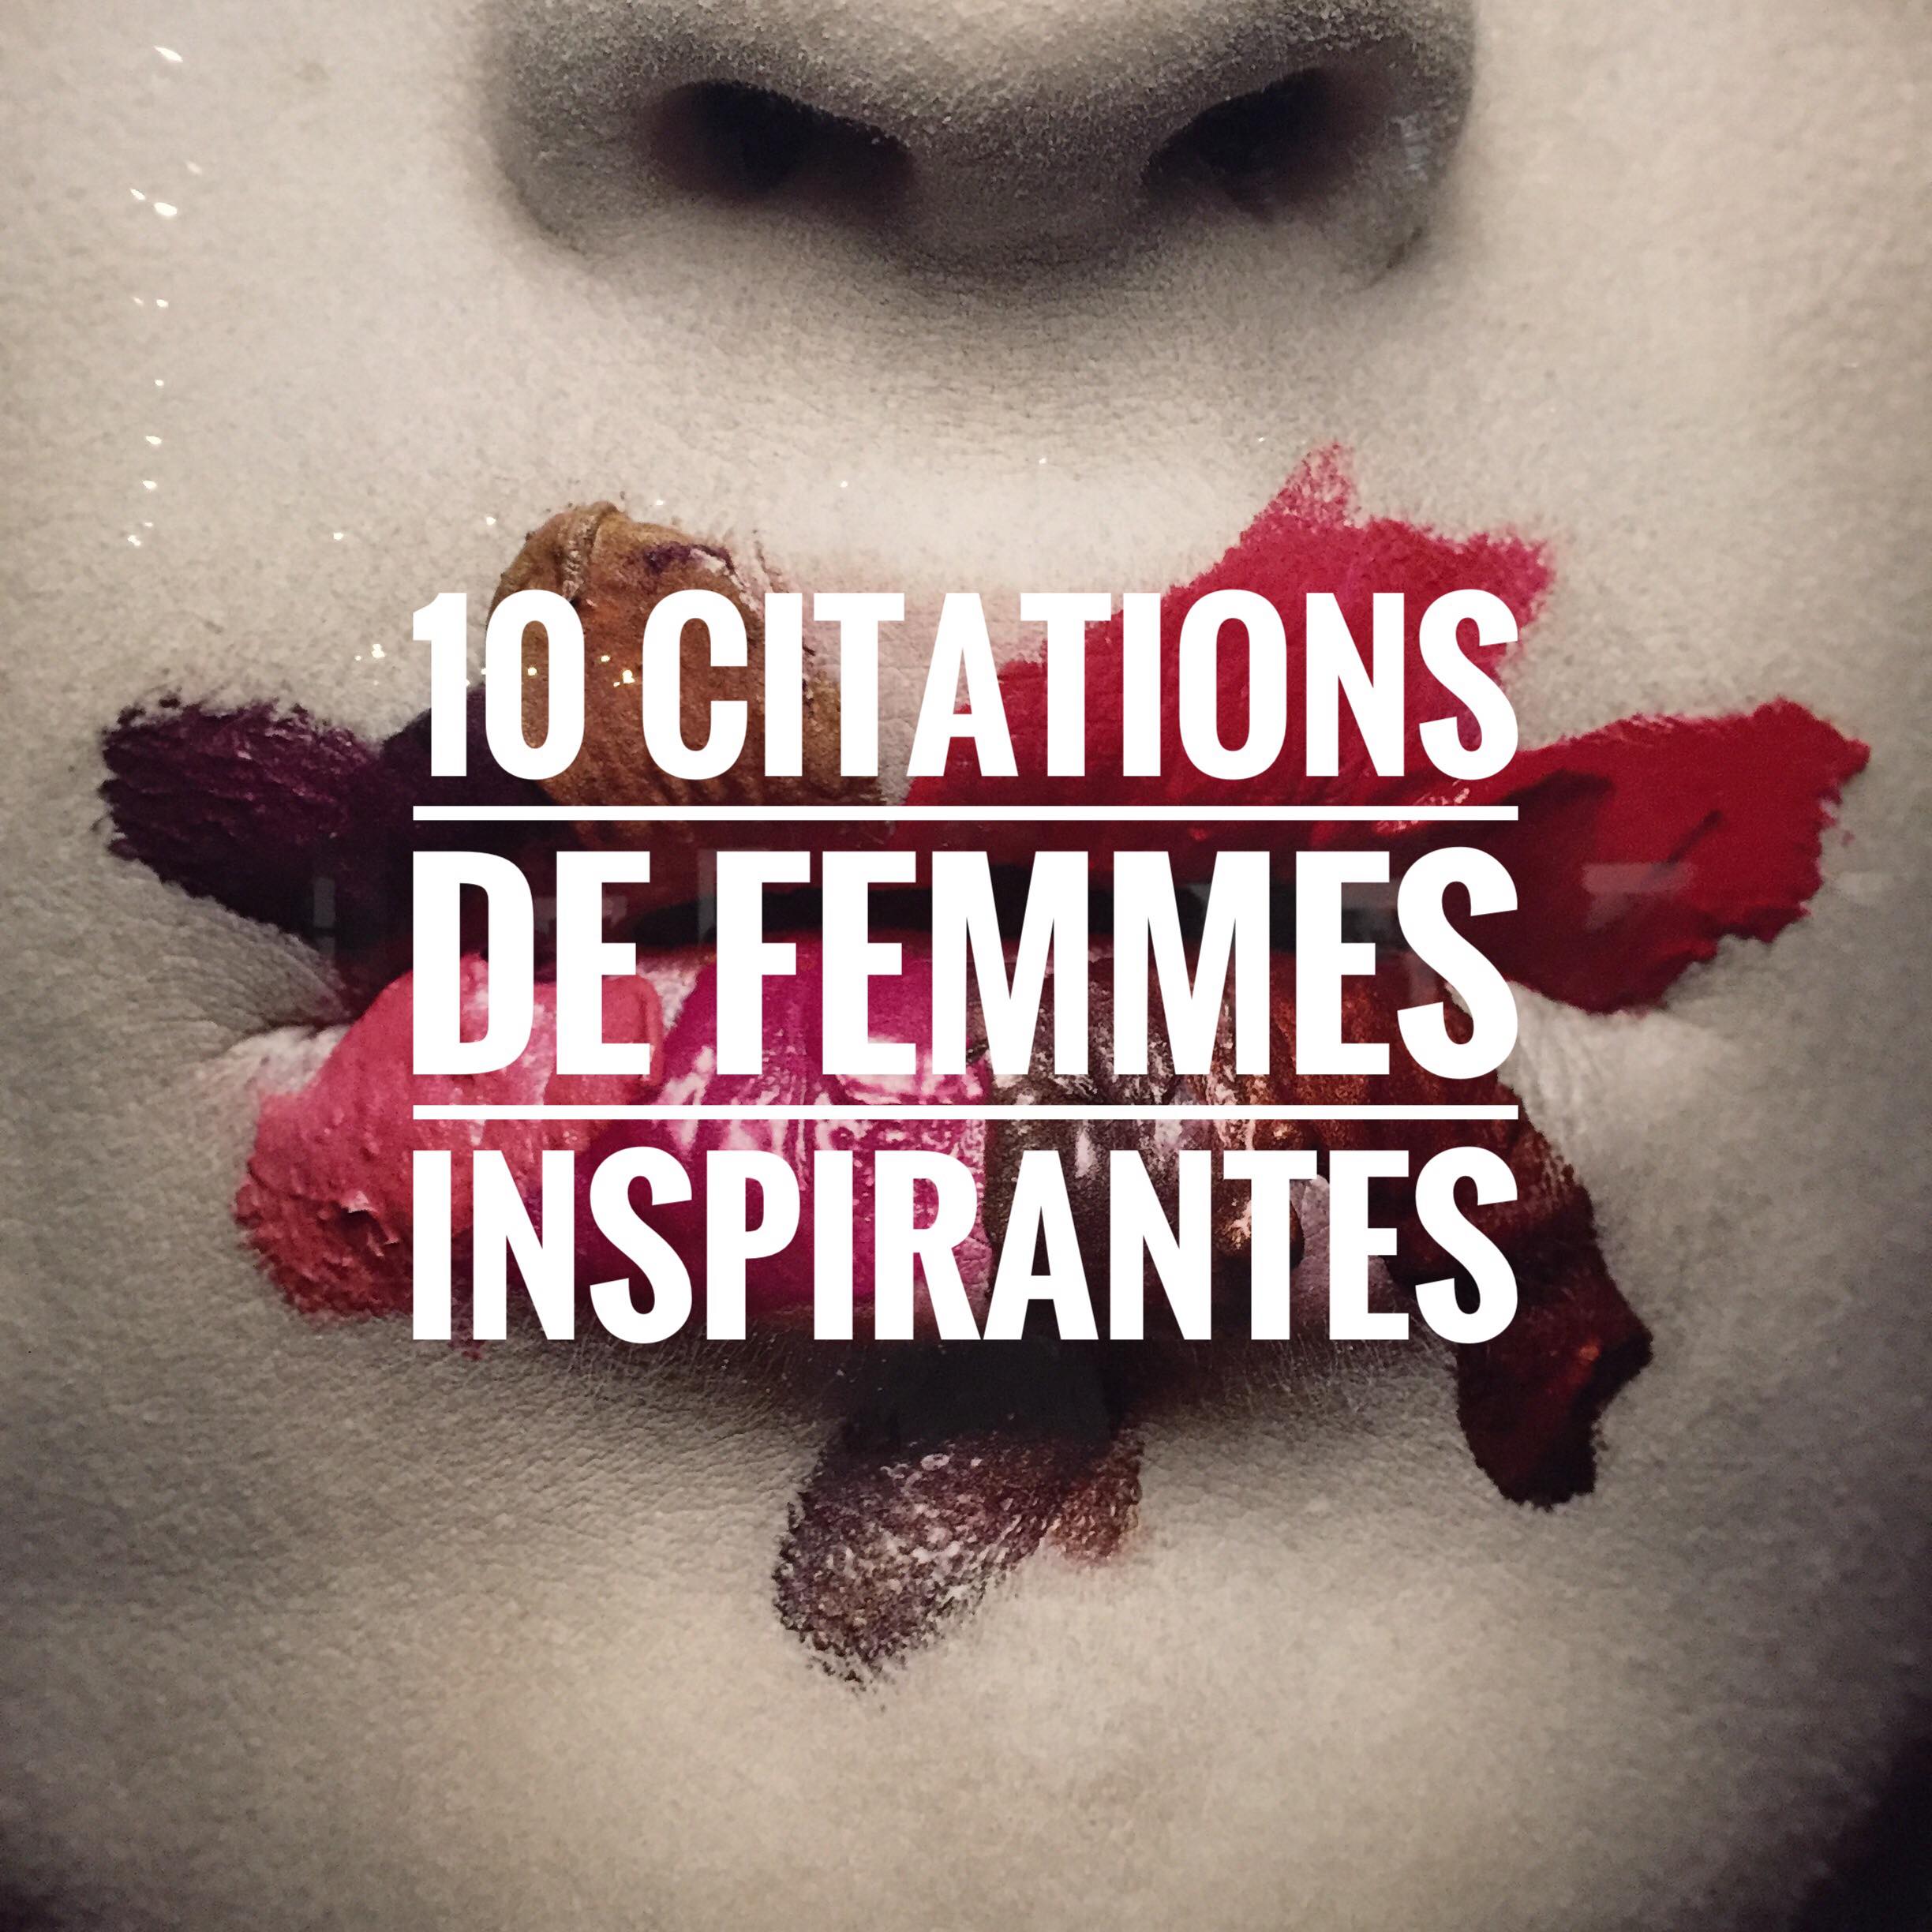 10 Citations De Femmes Inspirantes On My Lipsparis 5207